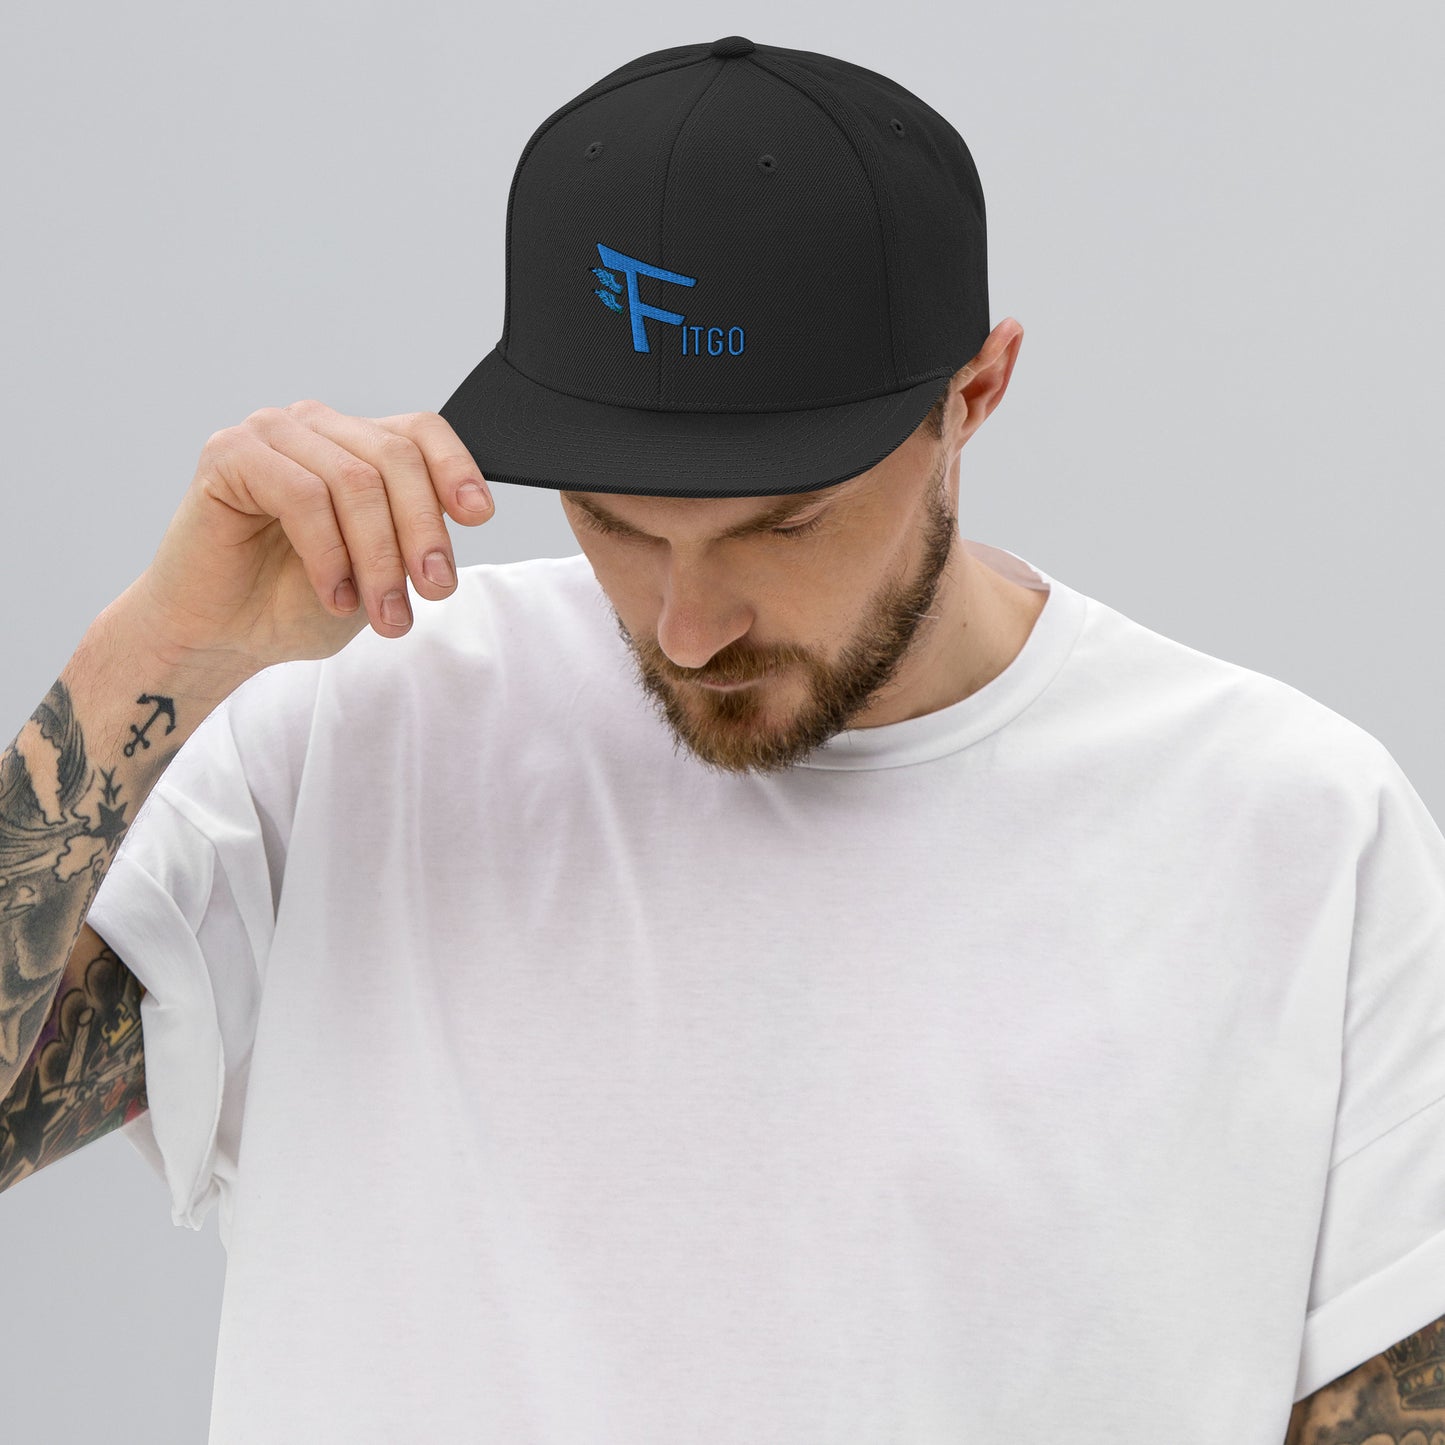 Men's Fitgo Stitched Snapback Hat